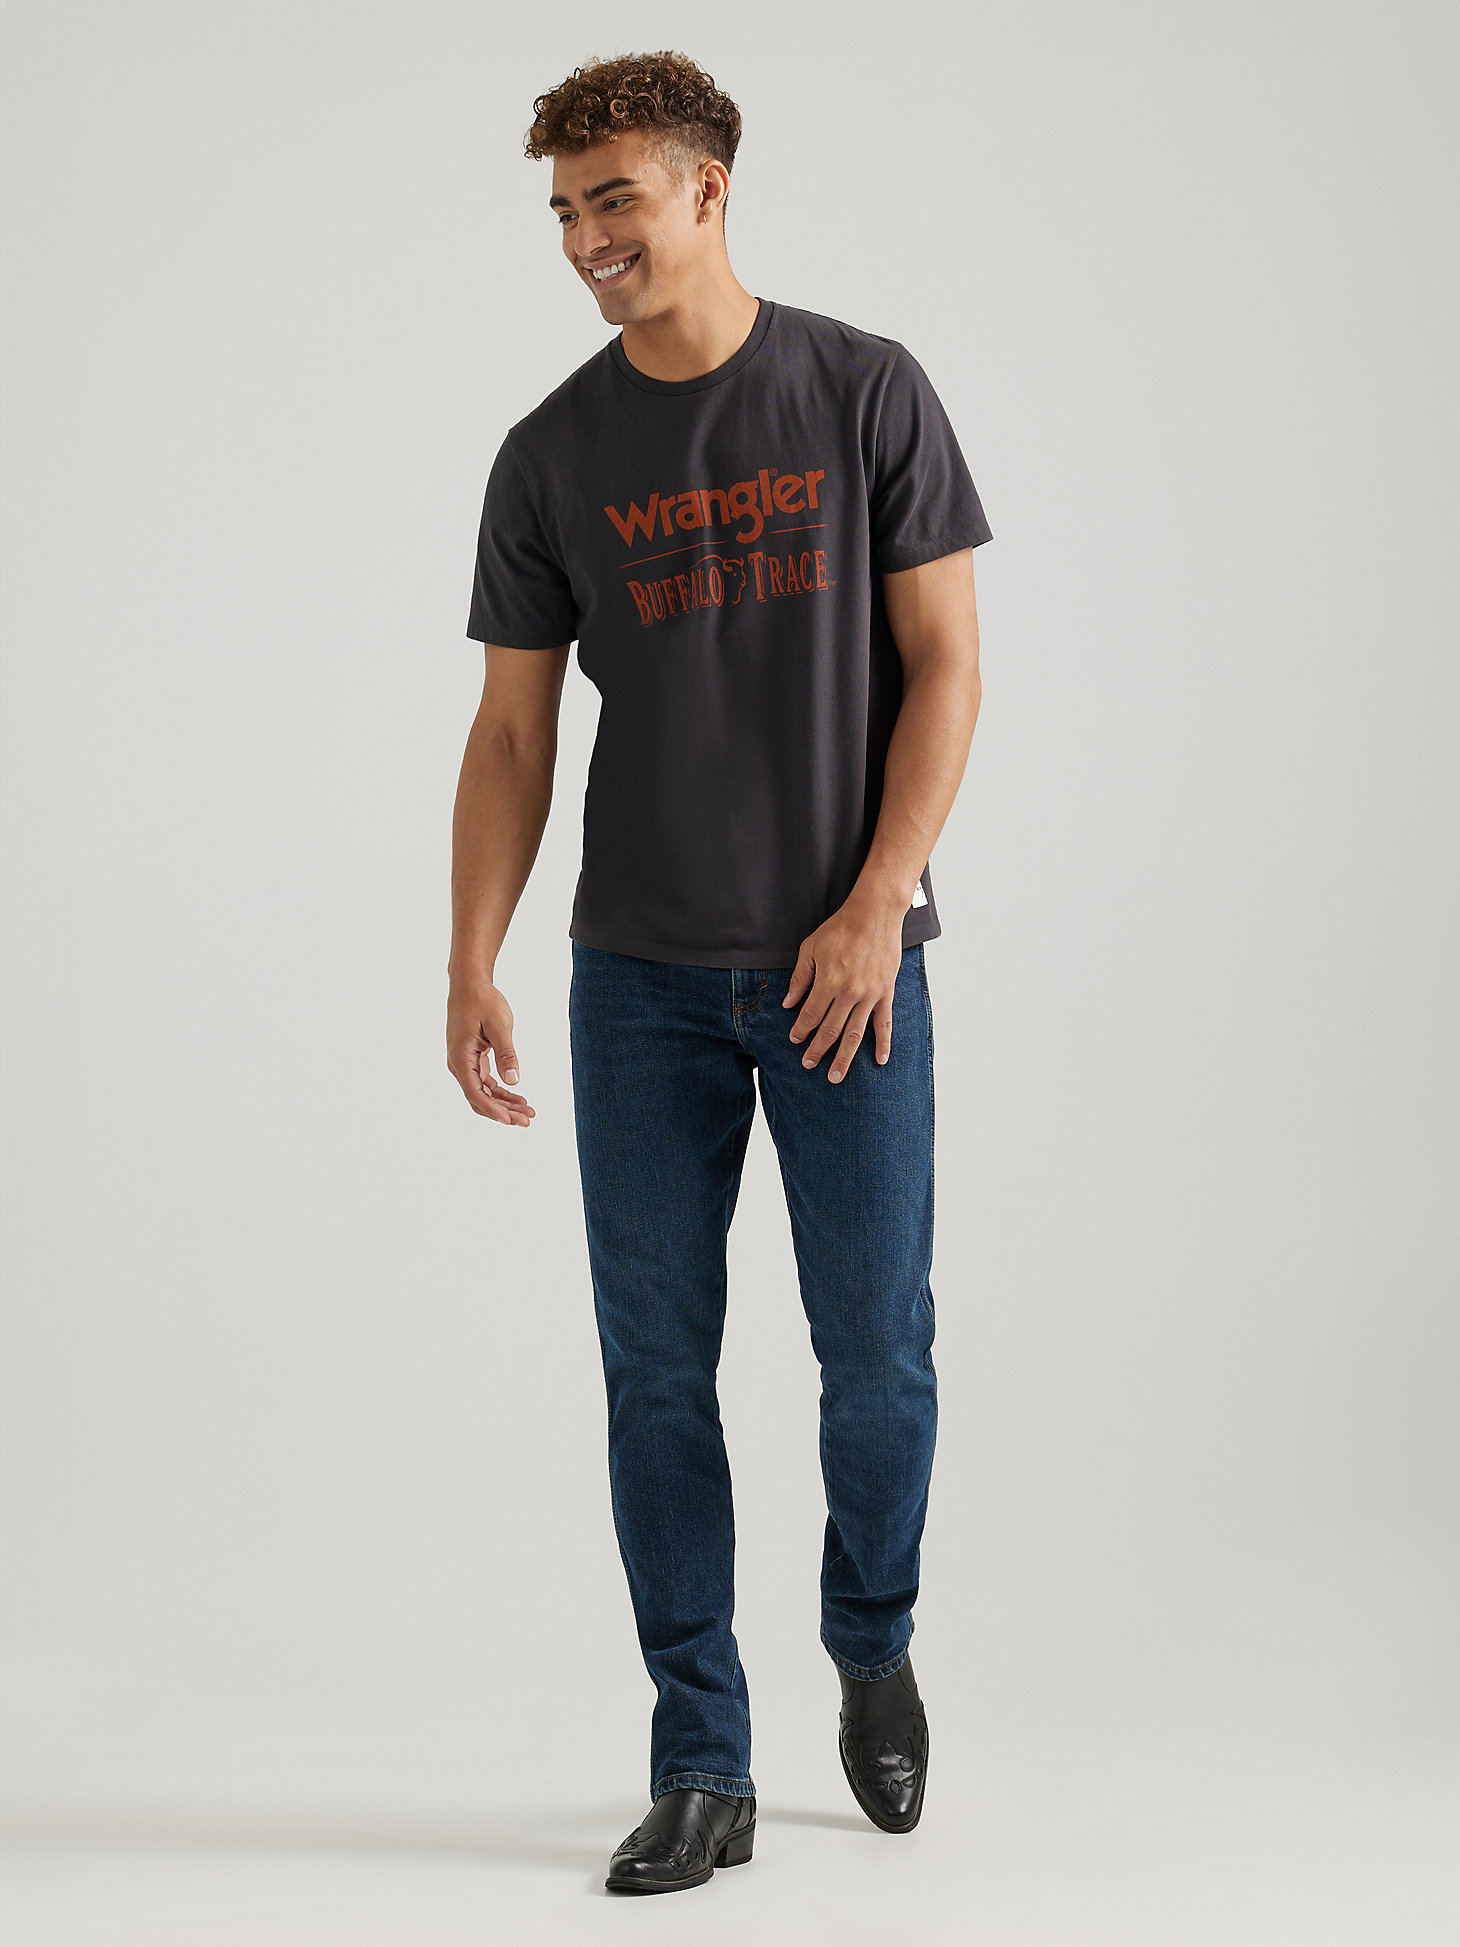 Wrangler x Buffalo Trace™ Men's Logo T-Shirt in Dark Grey alternative view 1